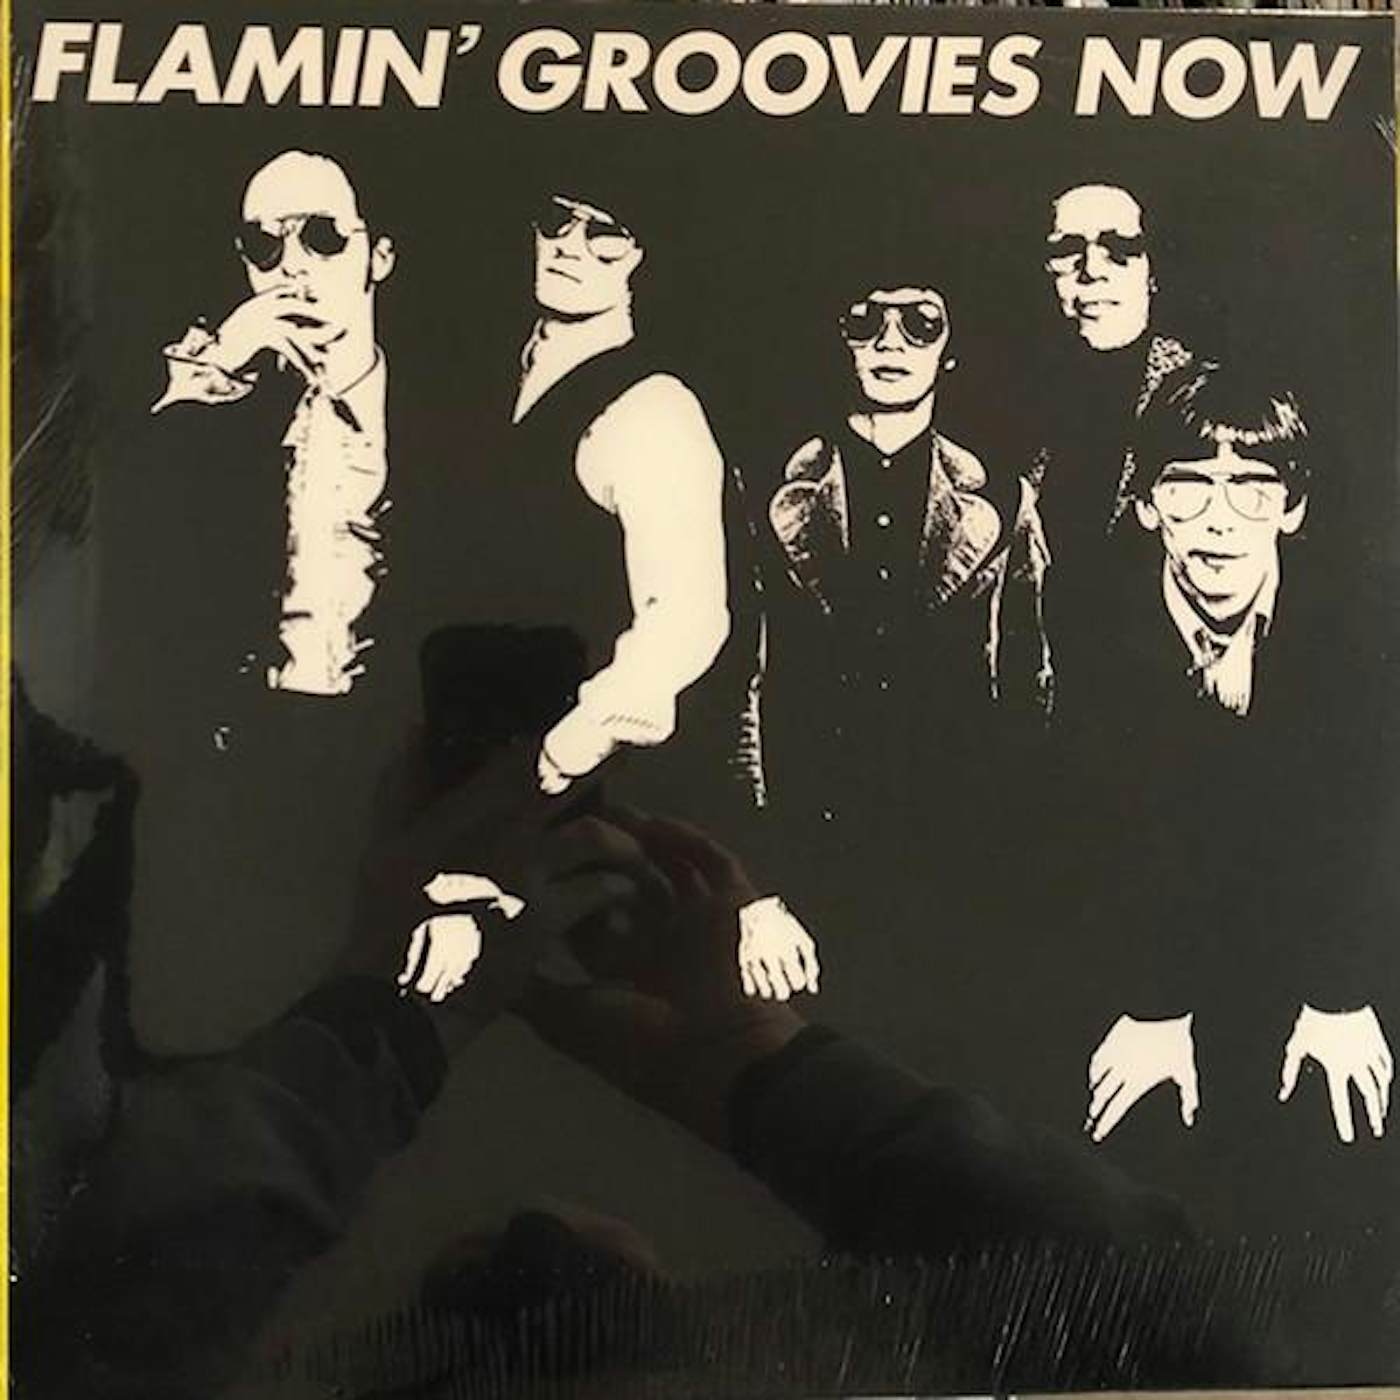 Flamin' Groovies Now Vinyl Record